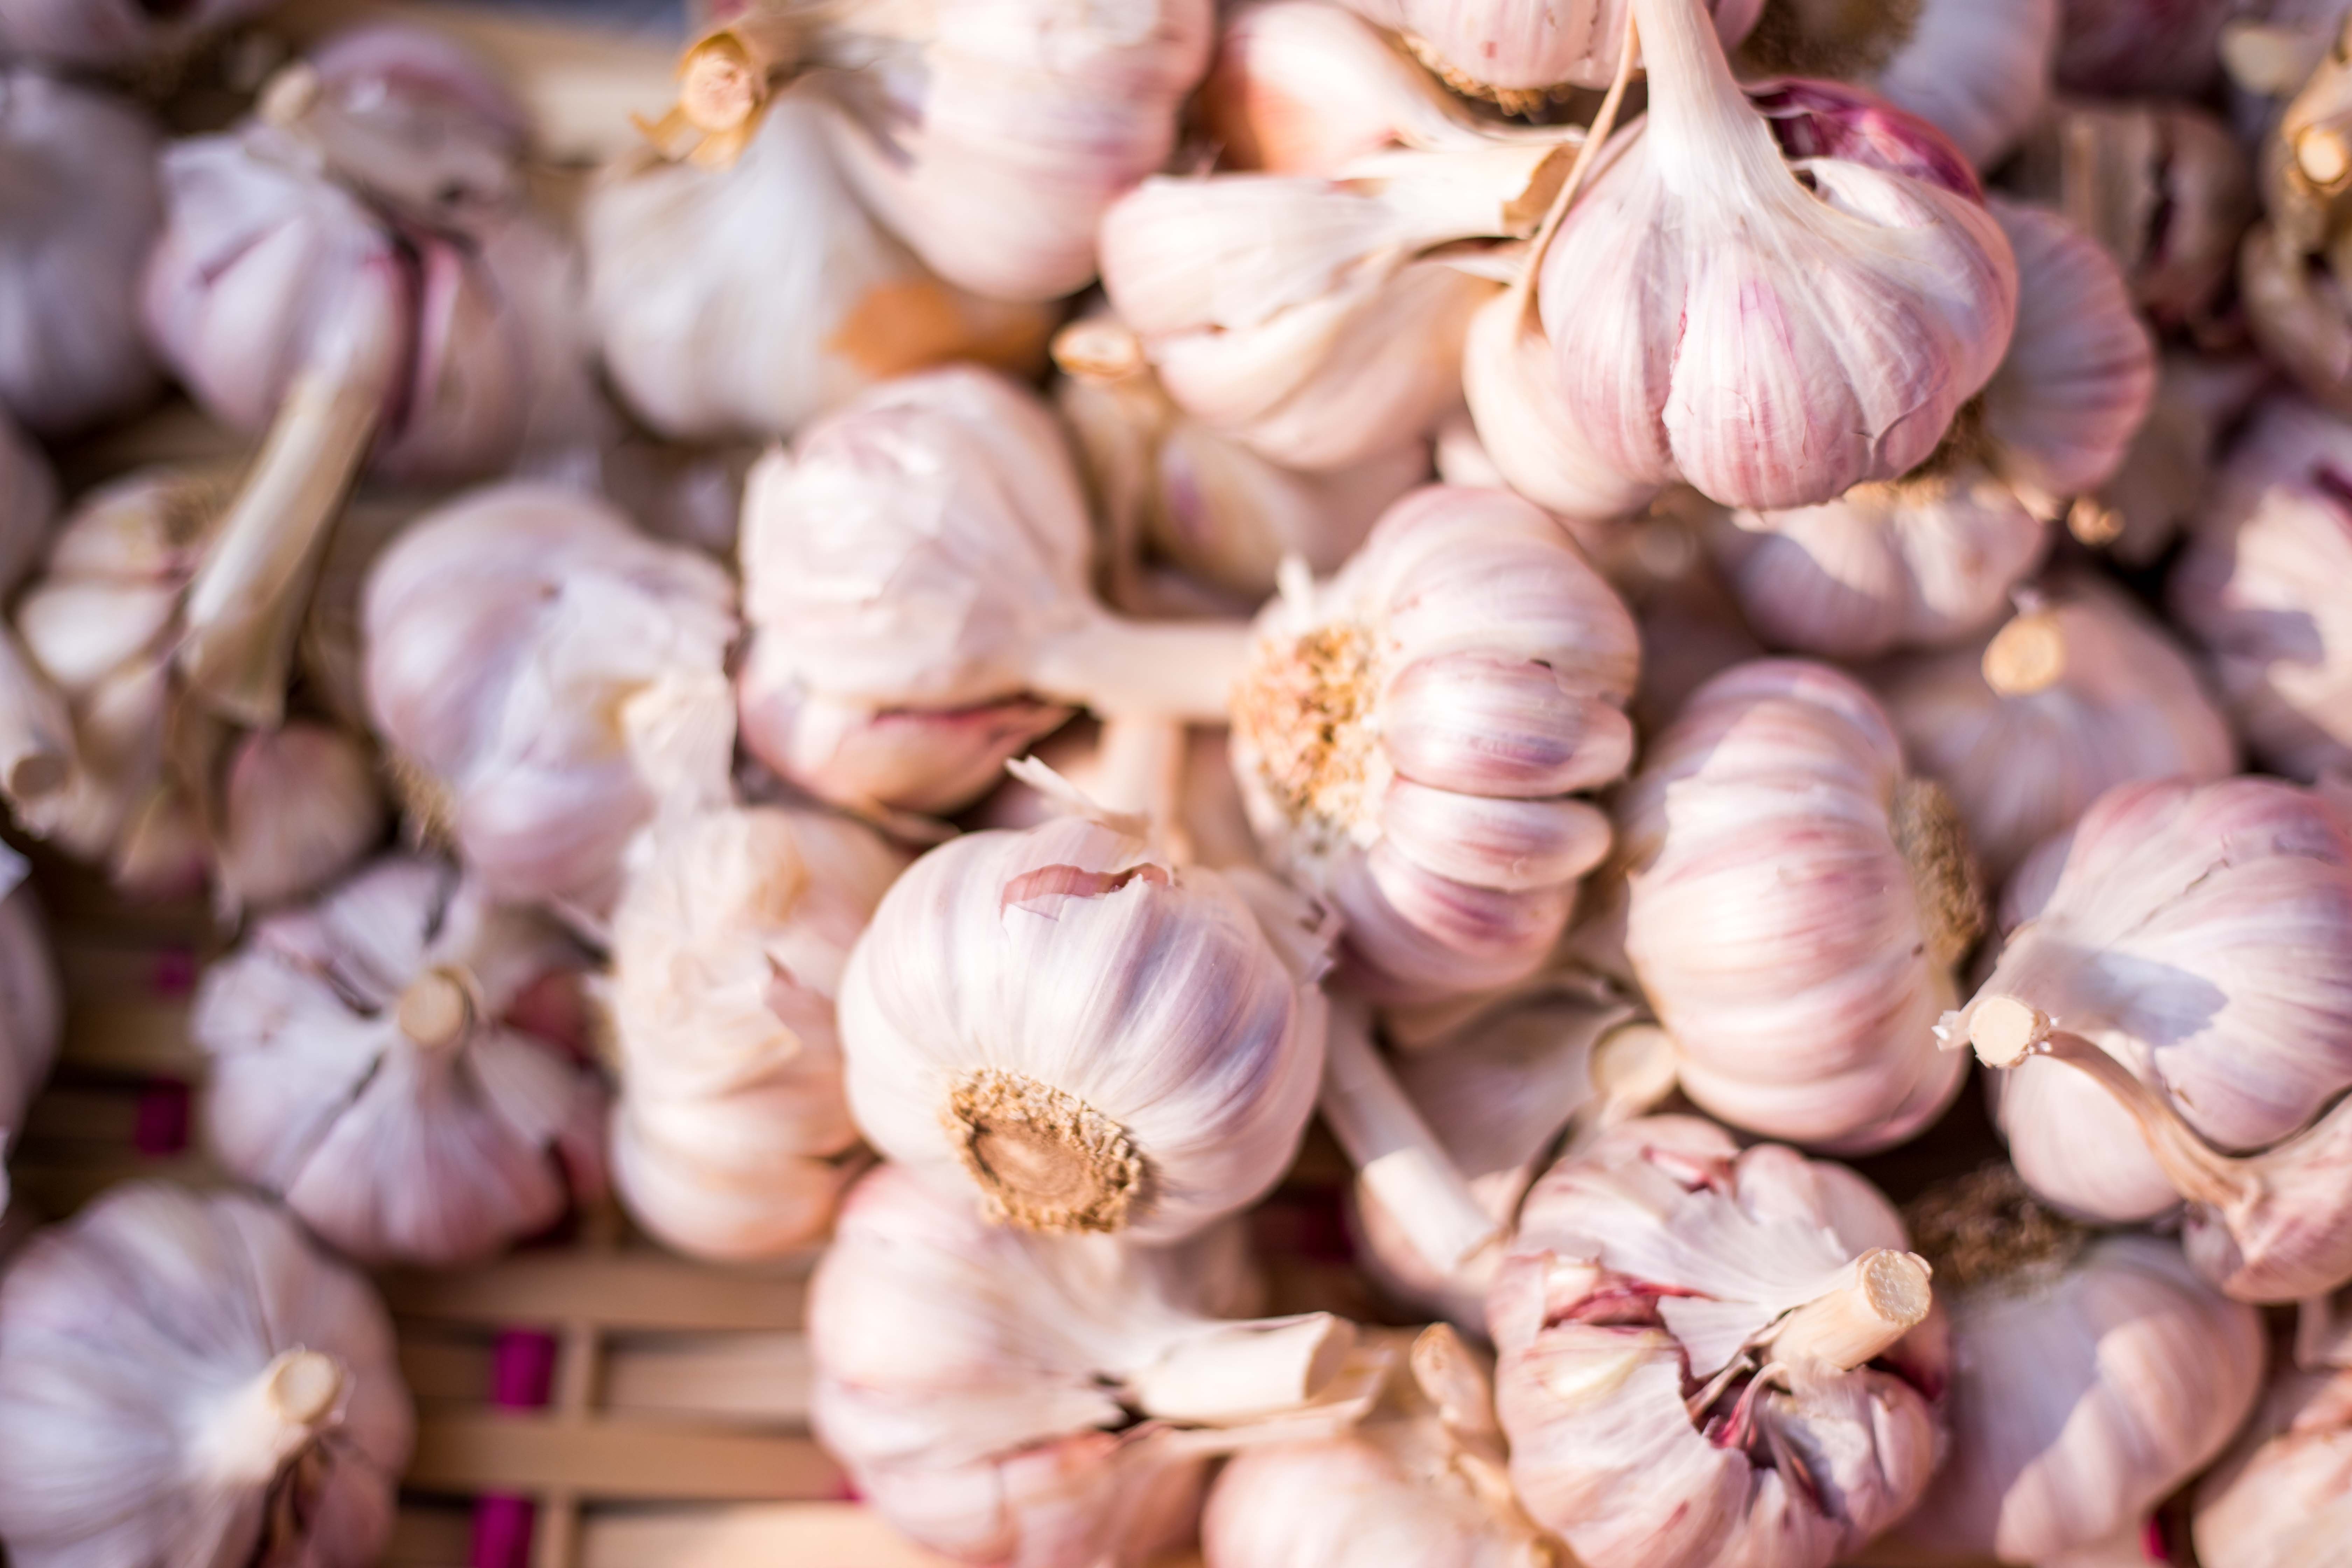 garlic| healthy diet| cholesterol reduction| pectin| garlic consumption